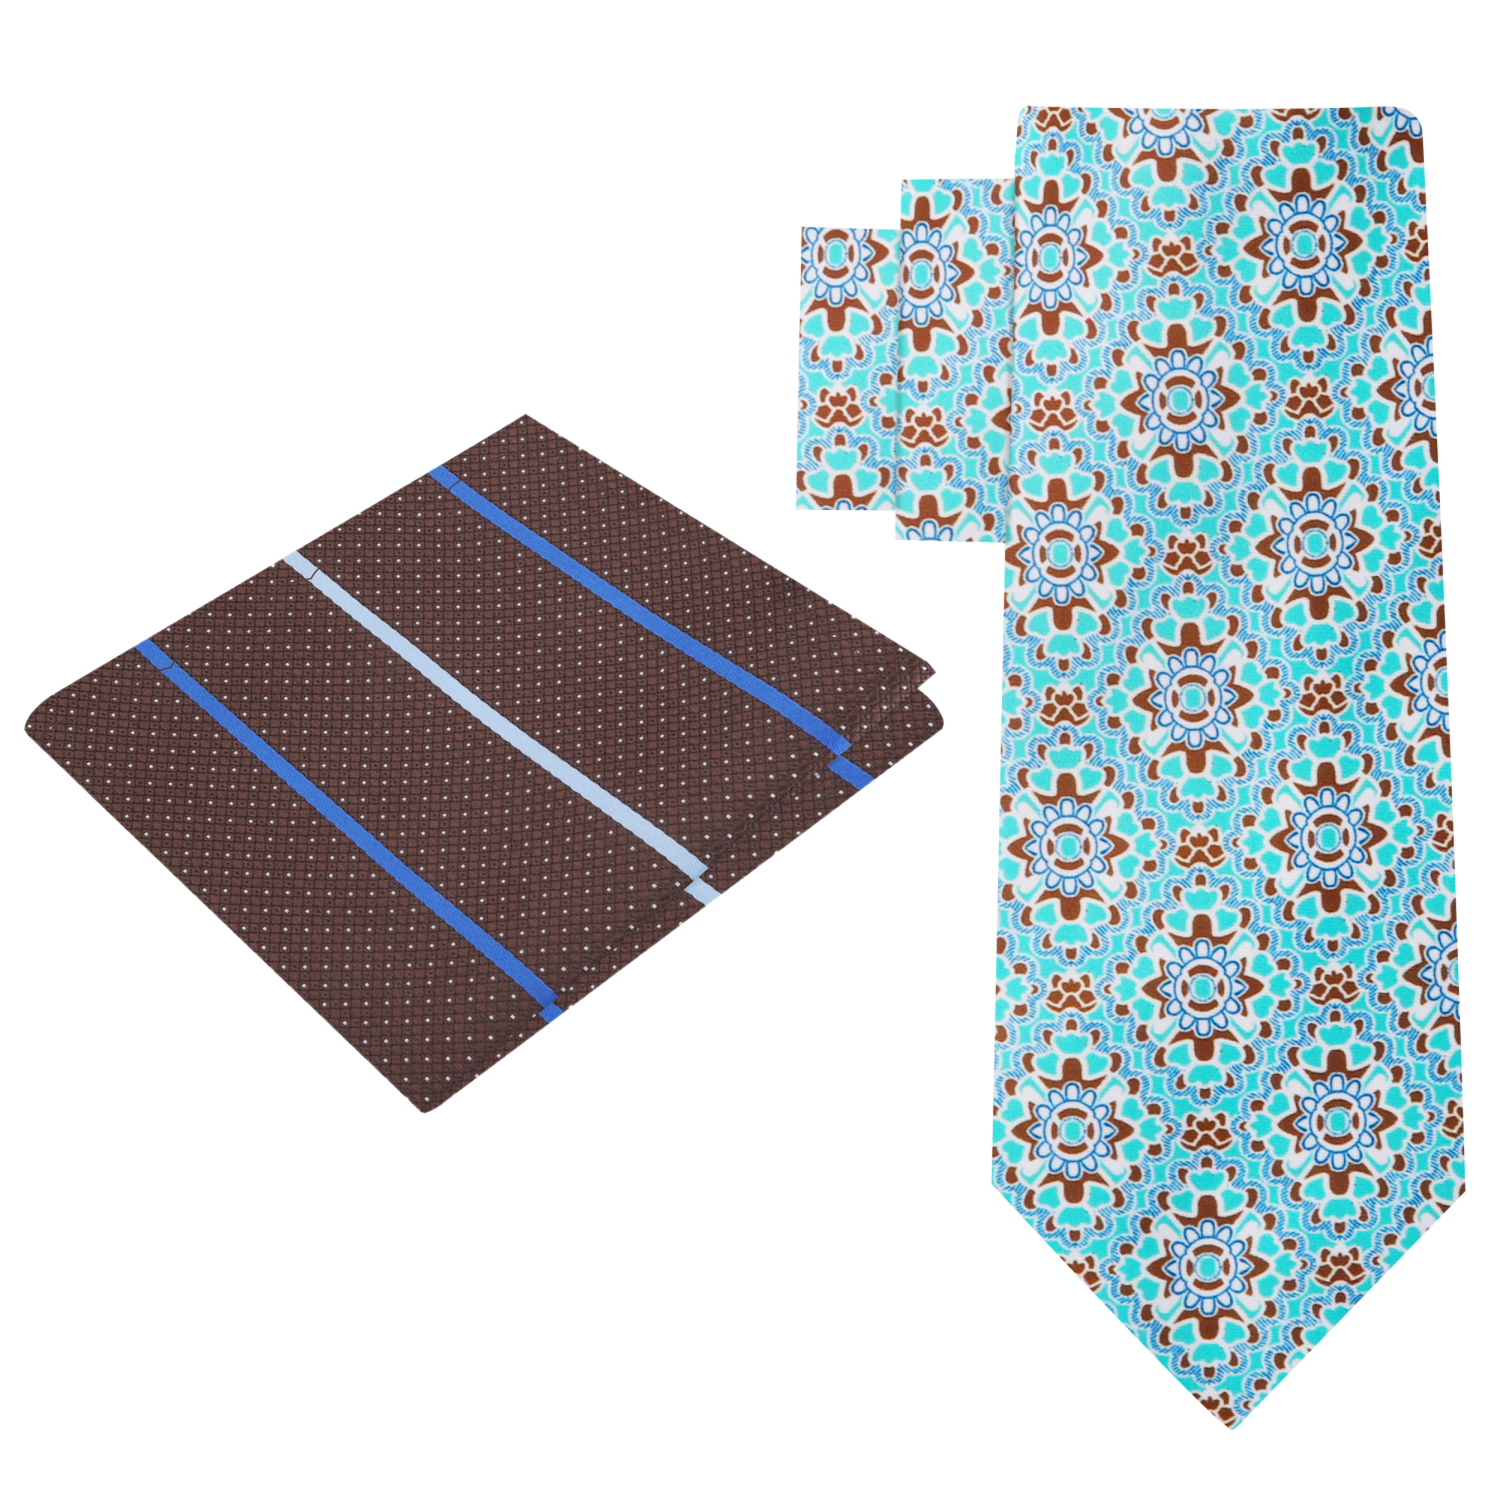 Alt View: Aqua Blue, Brown Mosaic Necktie and Brown, Blue Stripe Square